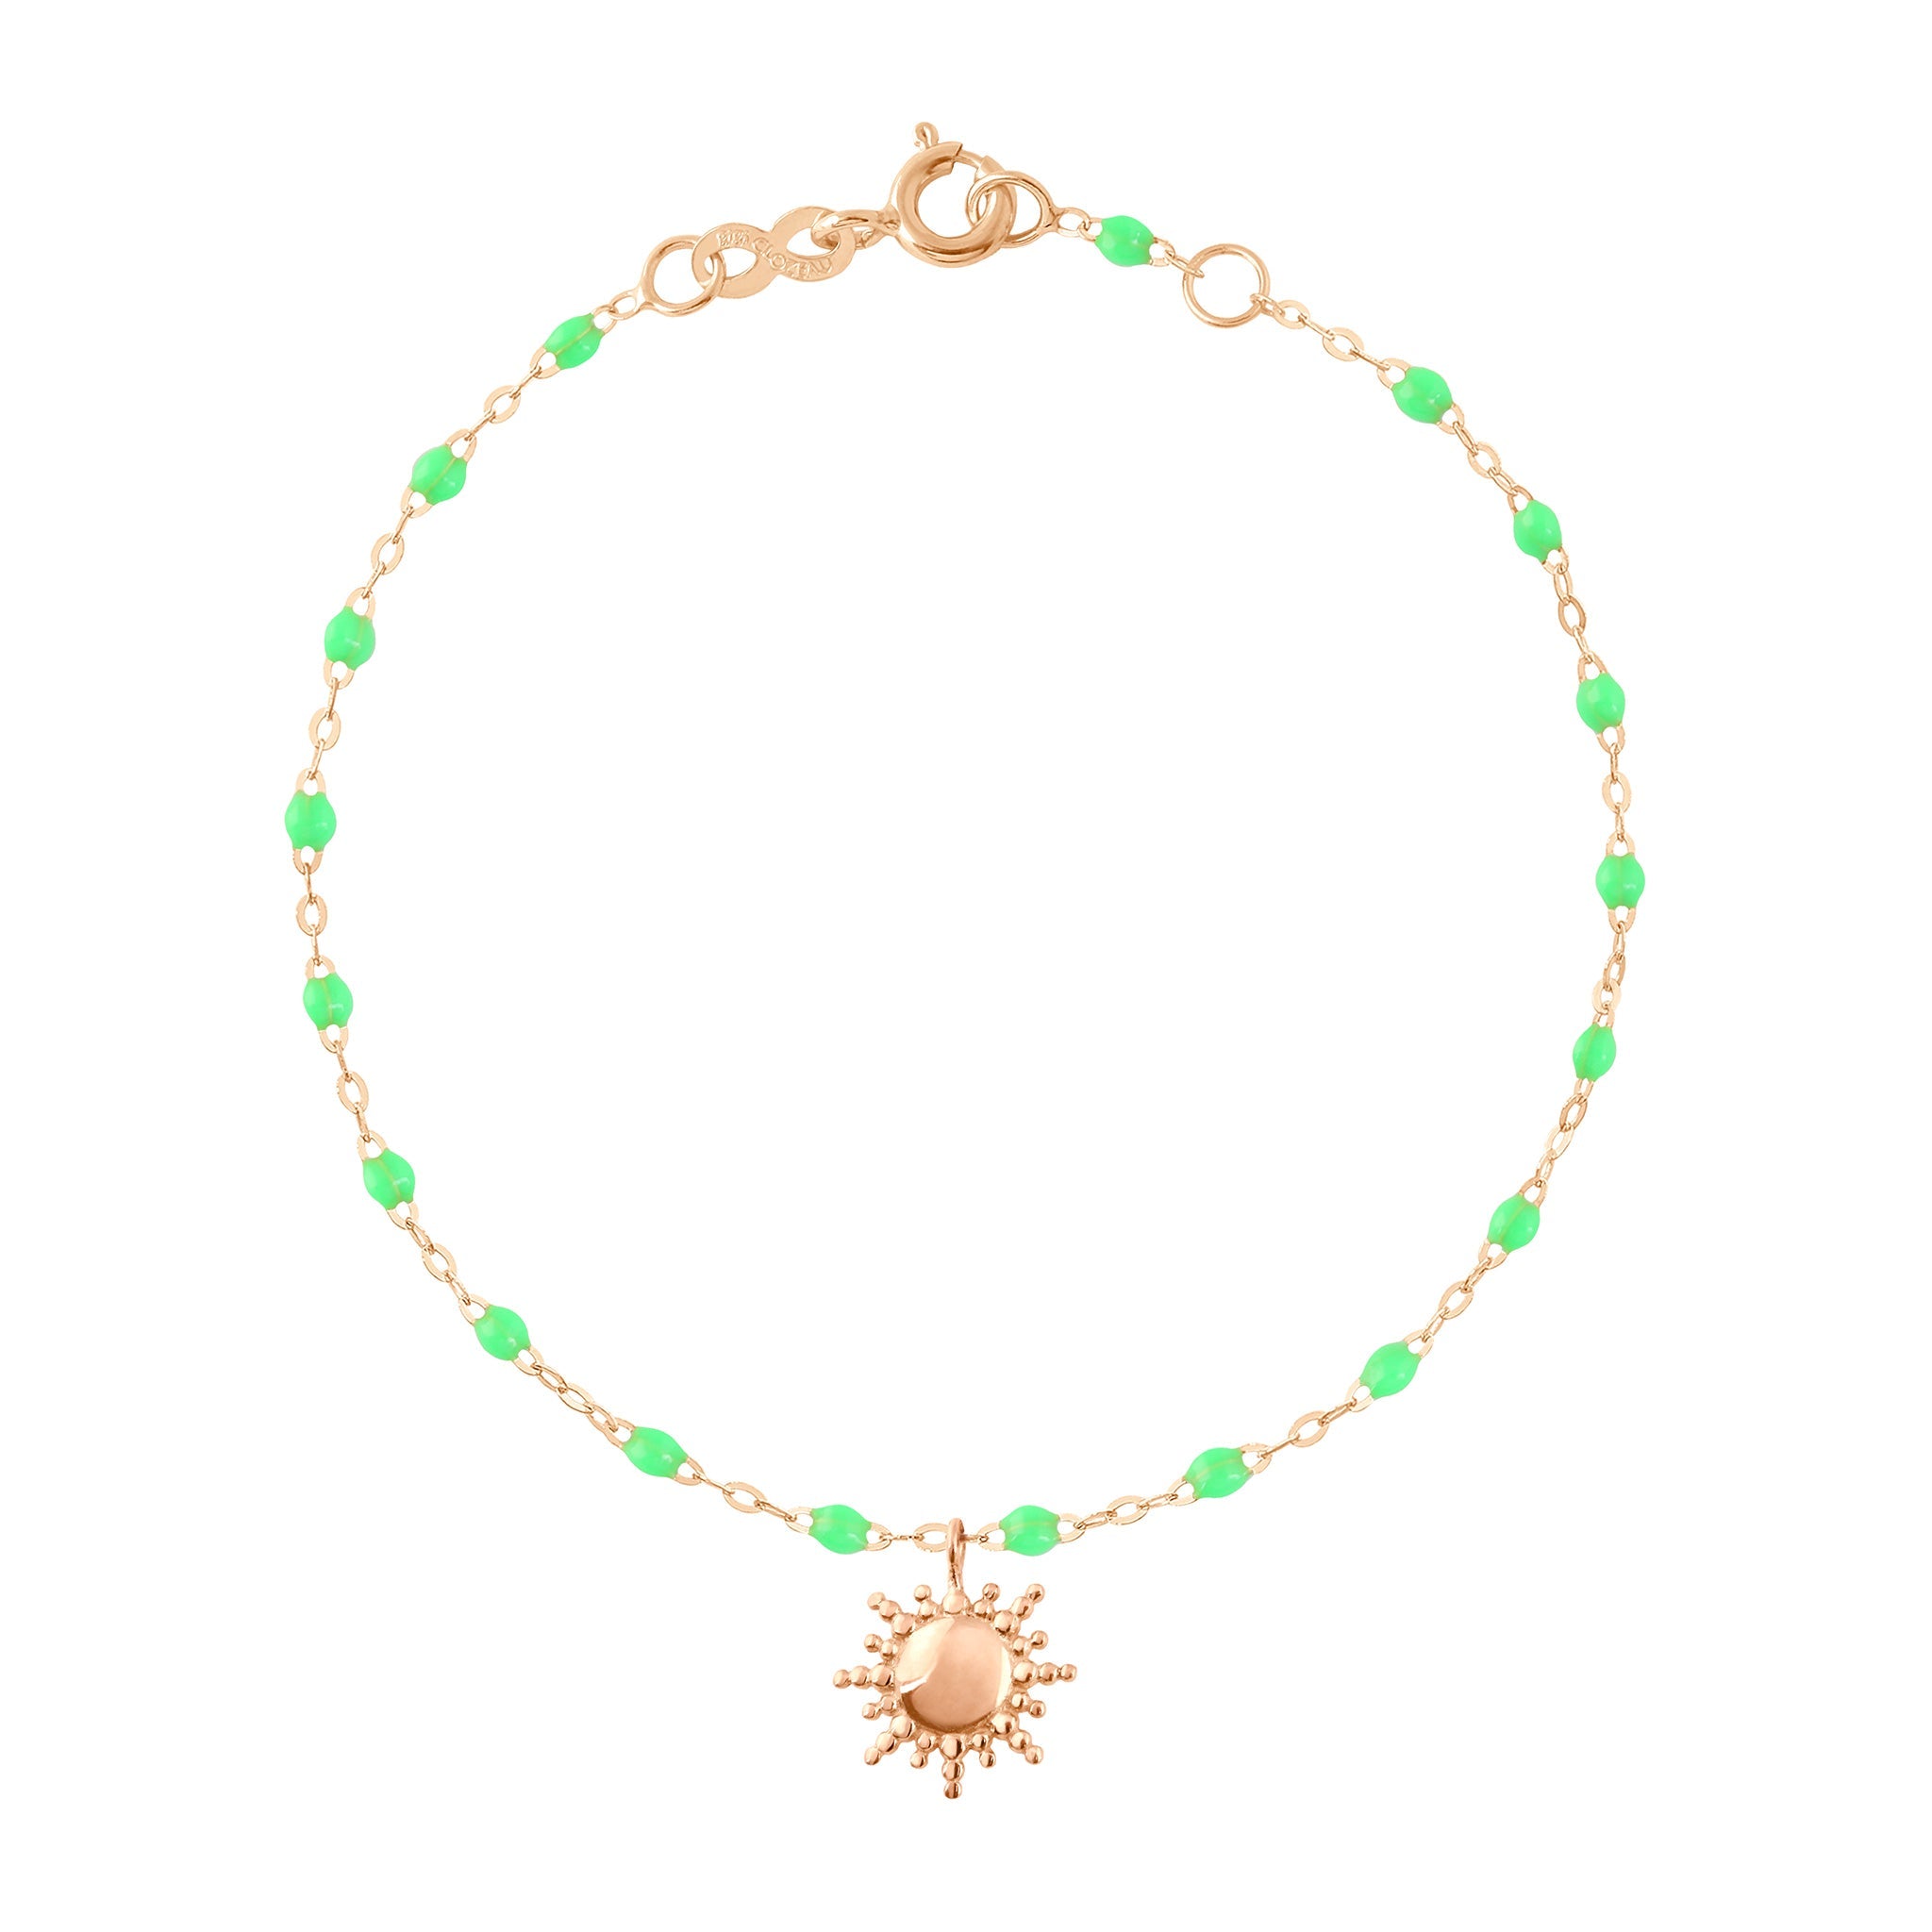 Bracelet vert fluo Soleil, or rose, 17 cm pirate Référence :  b3so001r3617xx -1